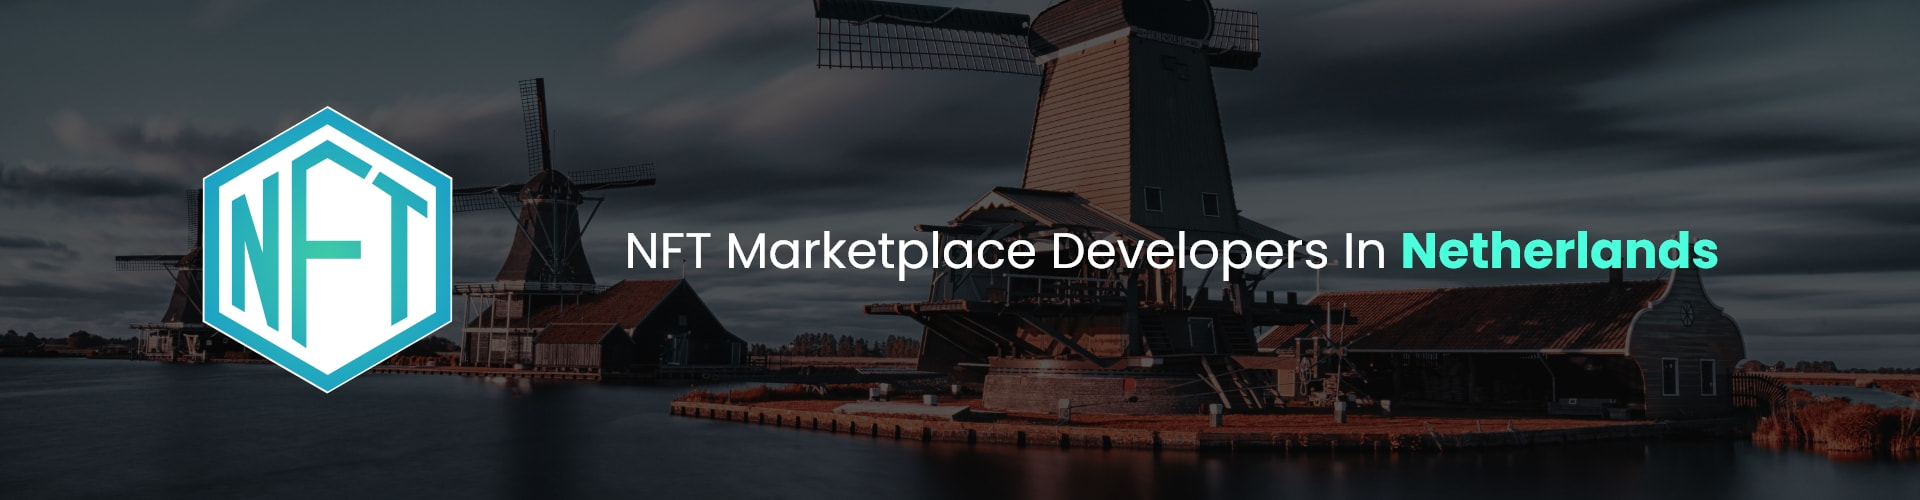 hire nft marketplace developers in Netherlands